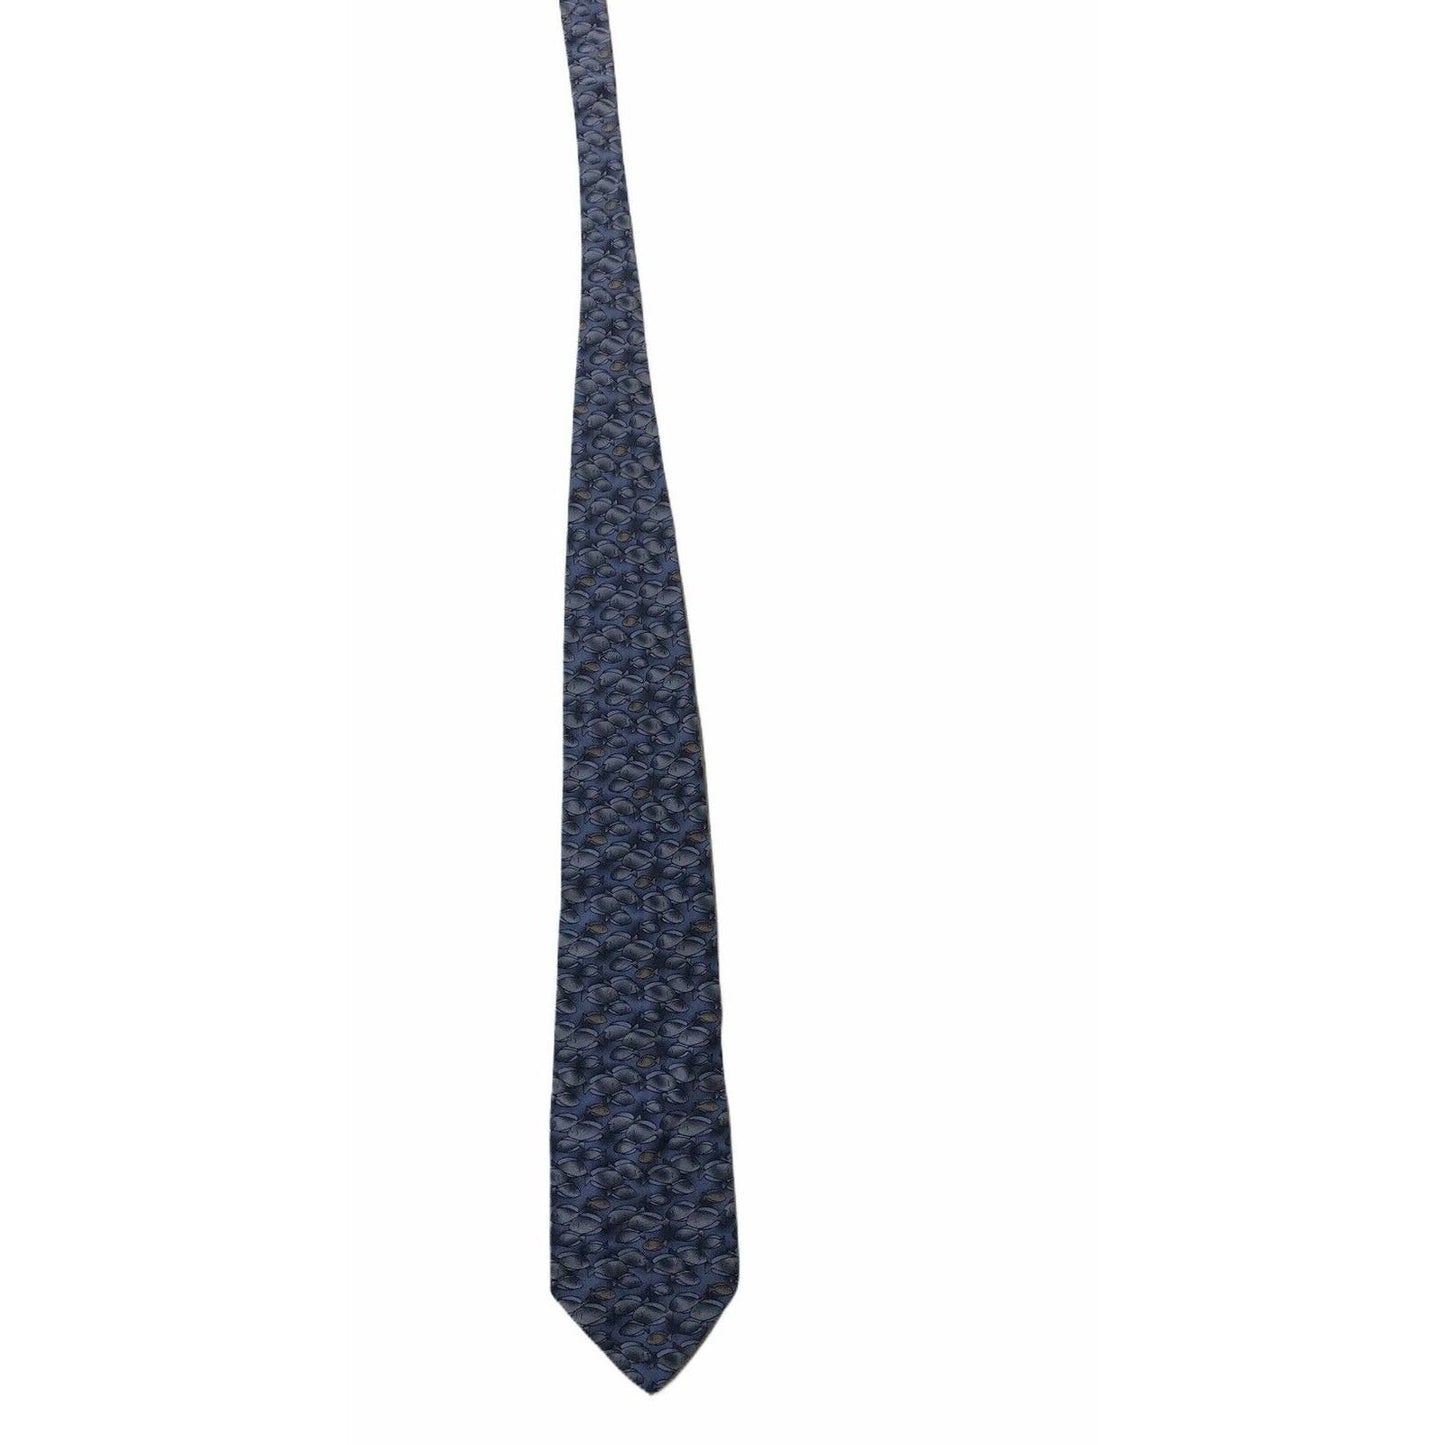 Ties To Nature Fish Blue 100% Silk Vintage Novelty Tie Necktie